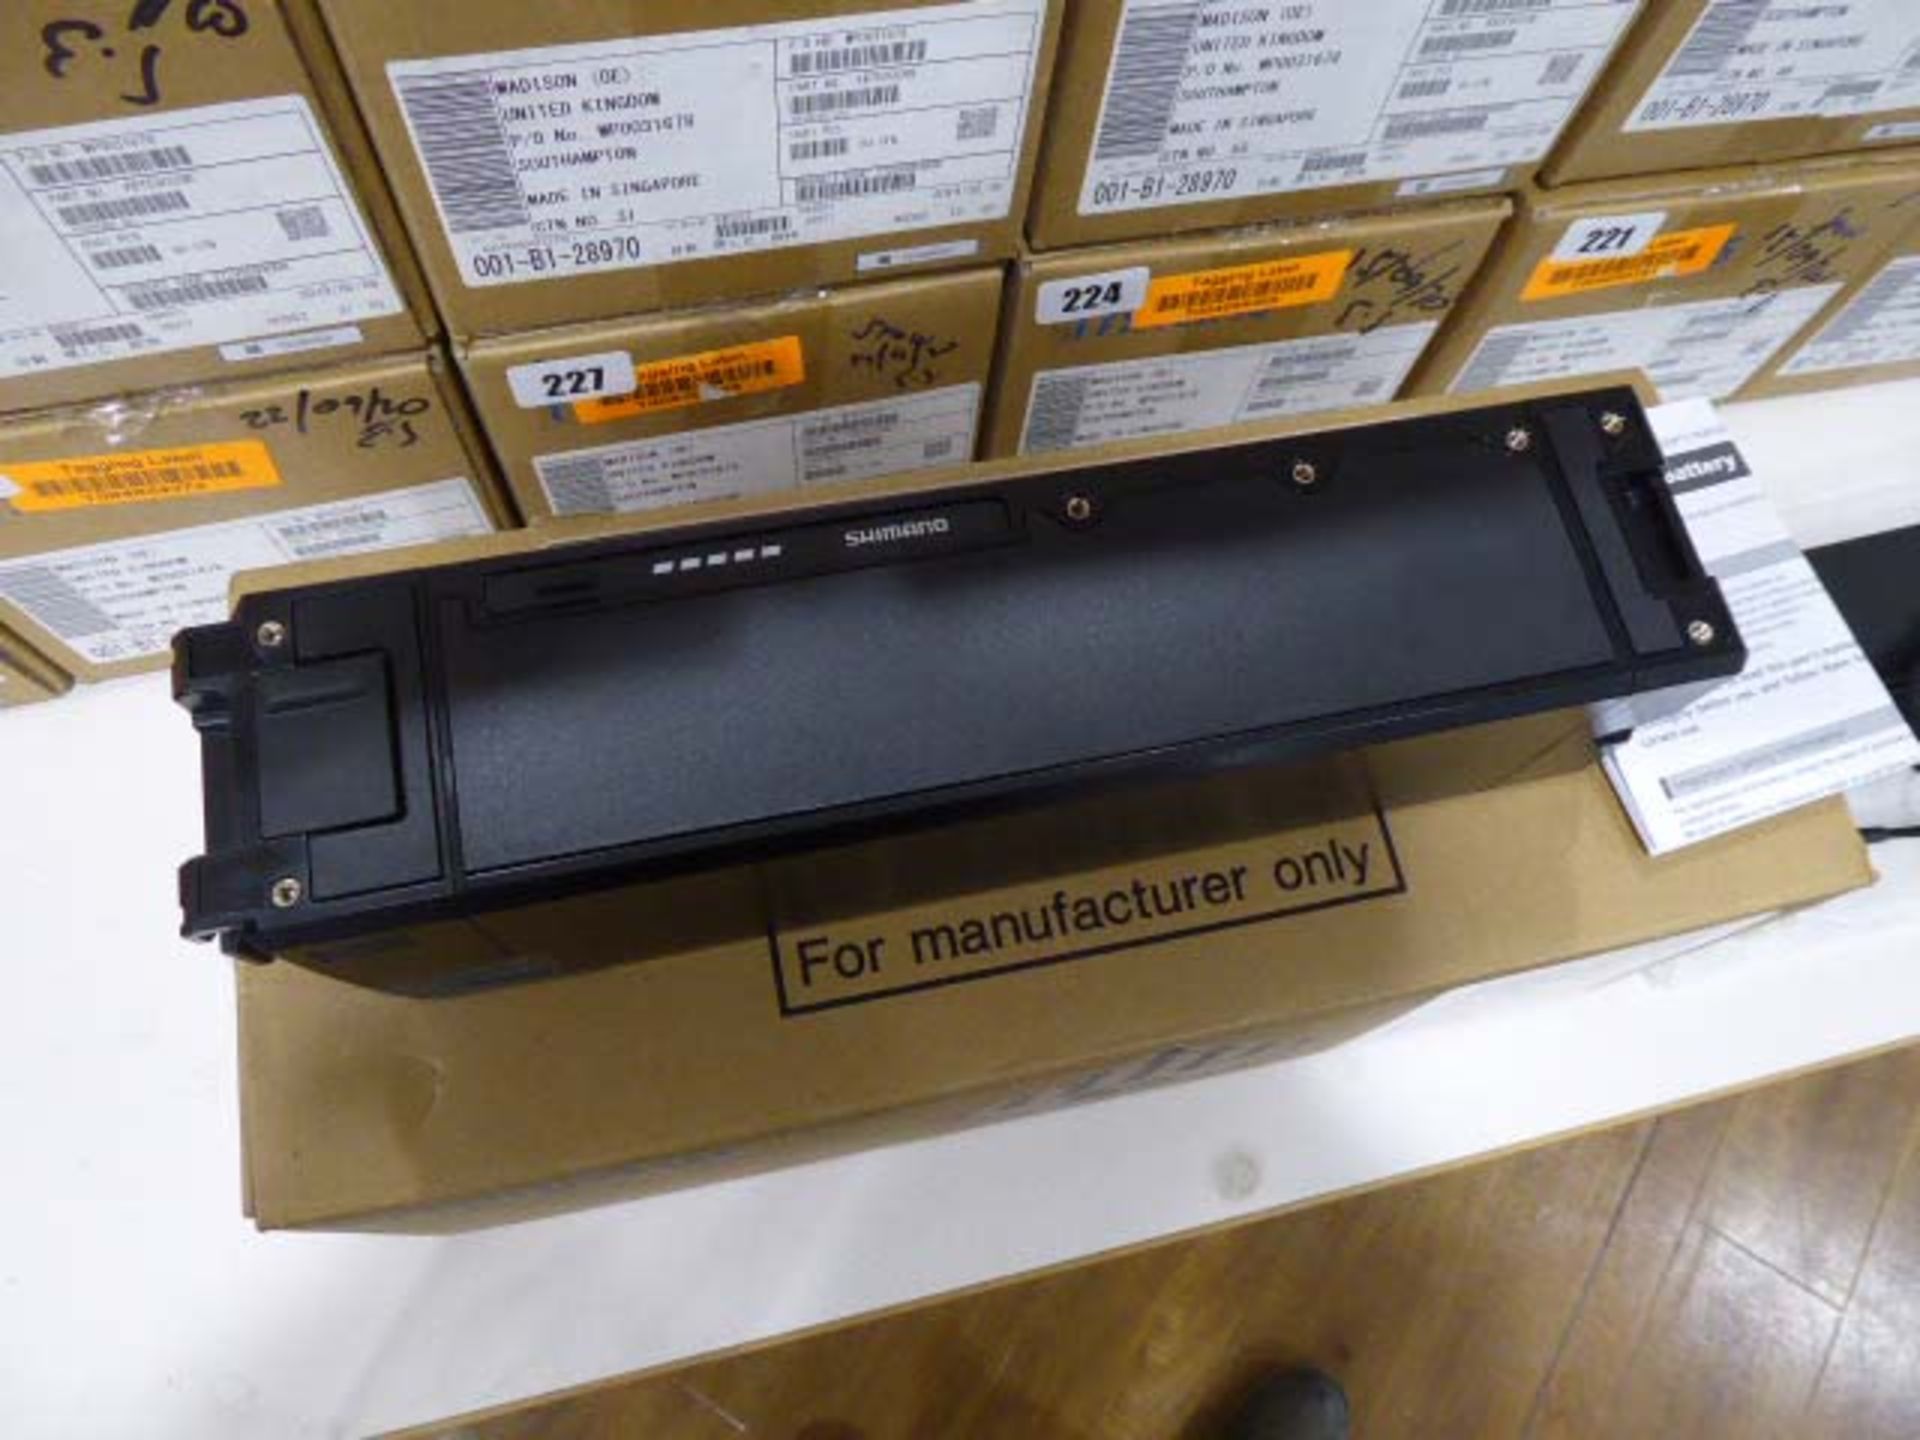 Shimano Model BT-E8020 li-ion battery pack with associated Shimano EC-E6000 charger